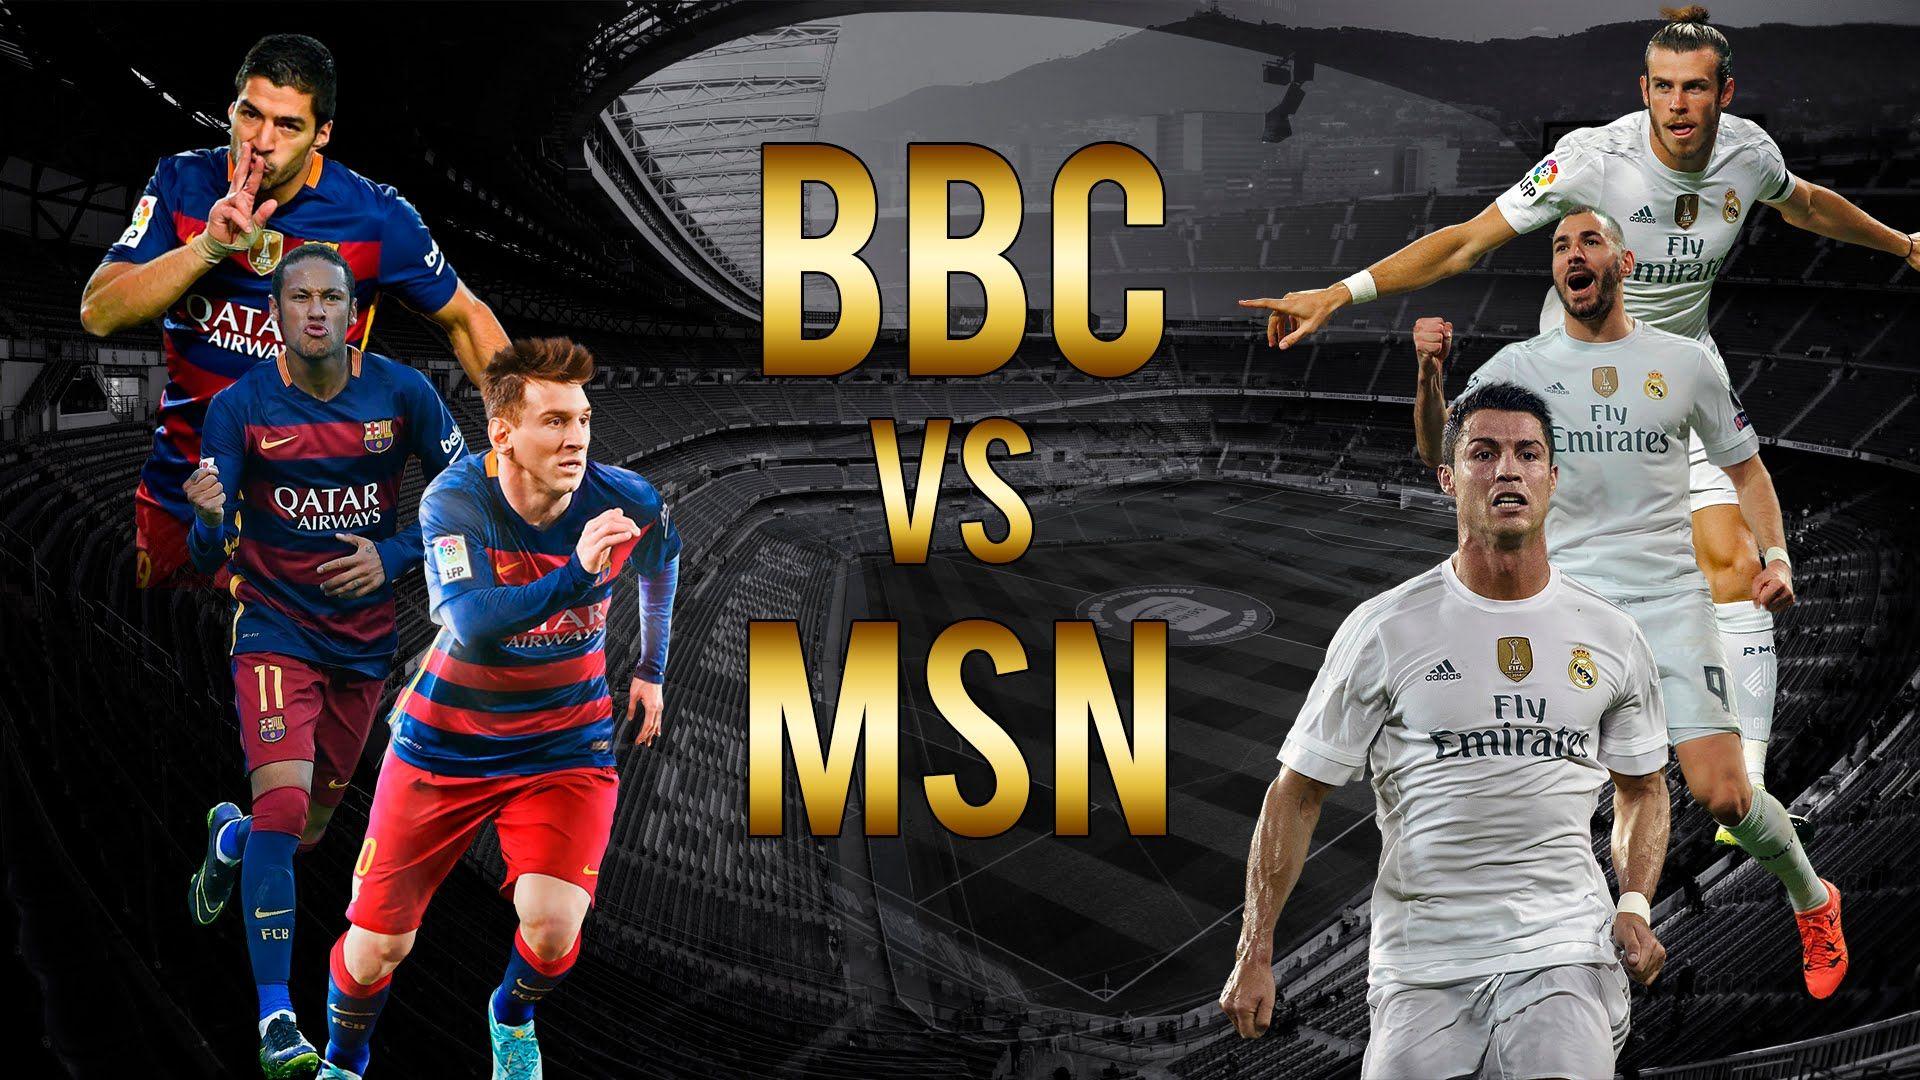 Messi ○ Suarez ○ Neymar VS Bale ○ Benzema ○ Cristiano Ronaldo